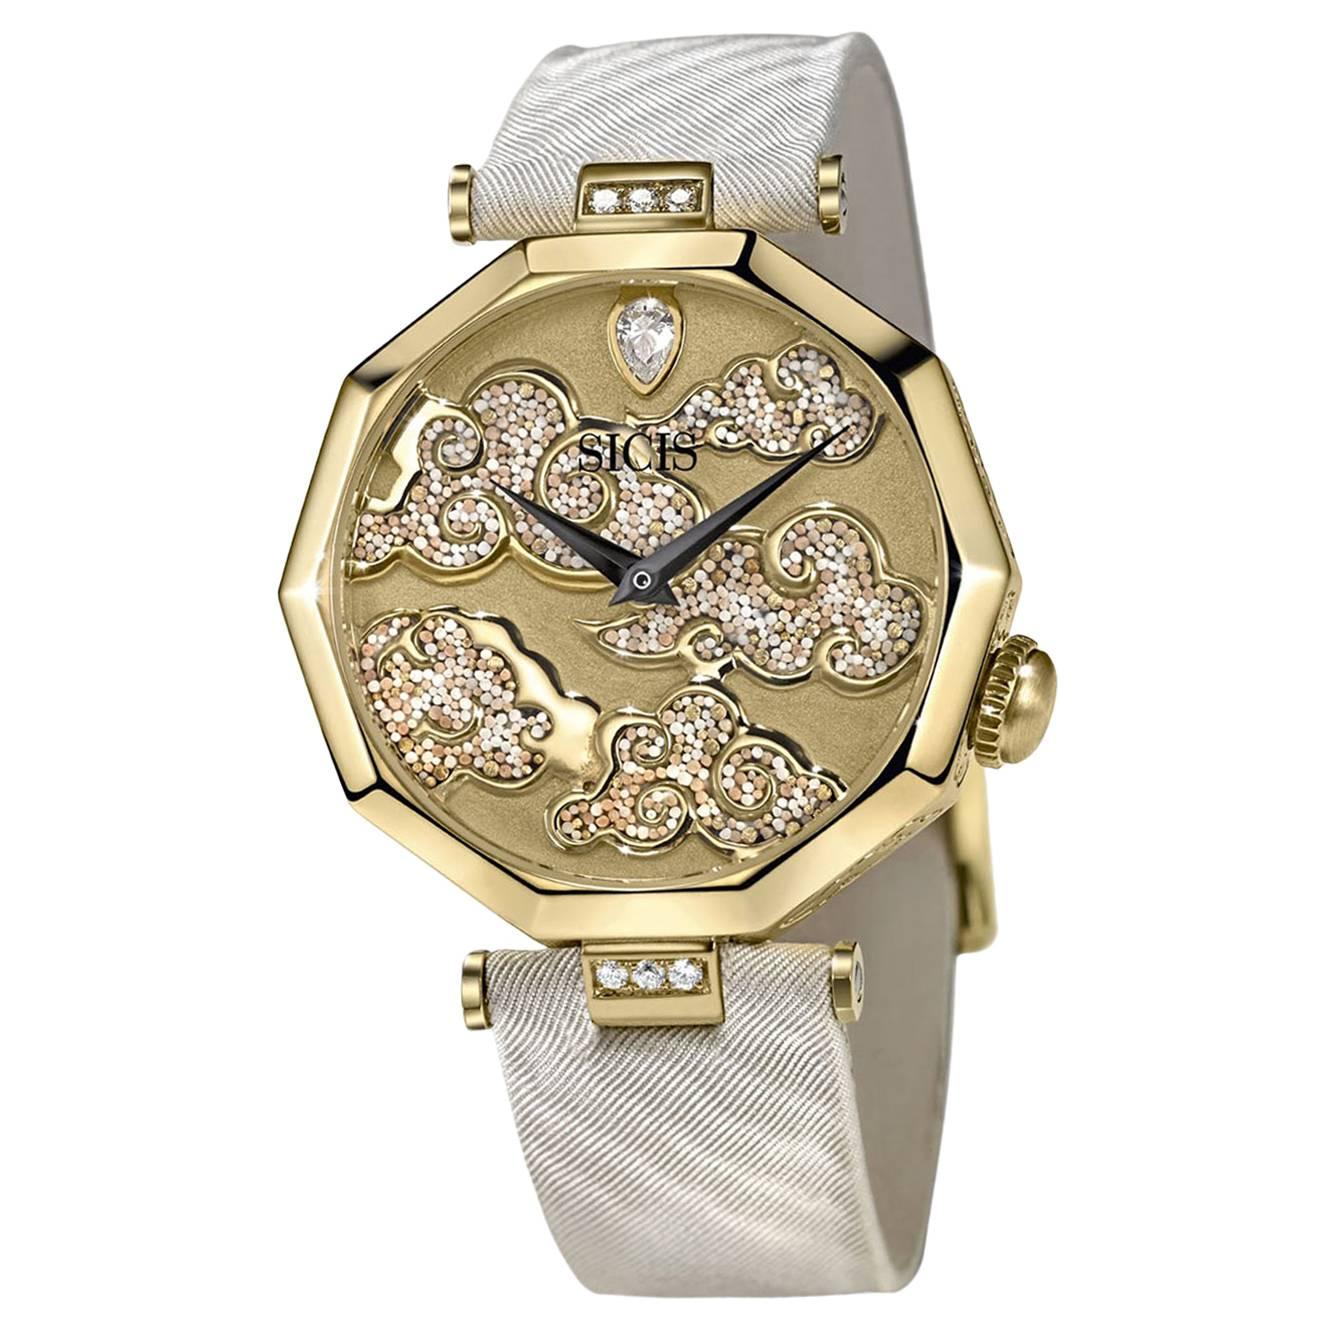 Stylish Wristwatch Gold Case White Diamond Hand decorated with Micromosaic